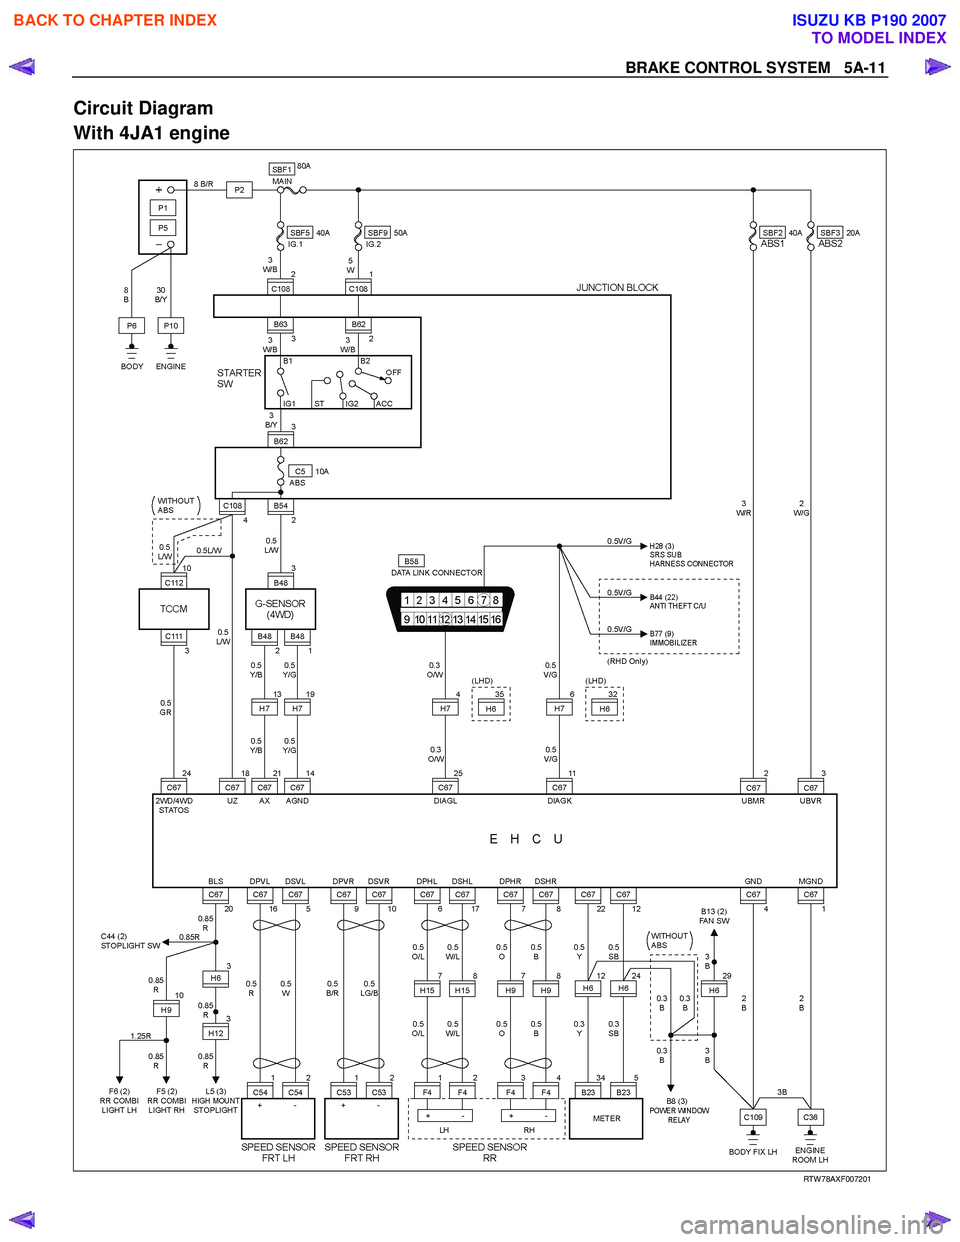 ISUZU KB P190 2007  Workshop Repair Manual BRAKE CONTROL SYSTEM   5A-11 
Circuit Diagram  
With 4JA1 engine  
  
 
 RTW 78AXF007201  
 
BACK TO CHAPTER INDEX
TO MODEL INDEX
ISUZU KB P190 2007 